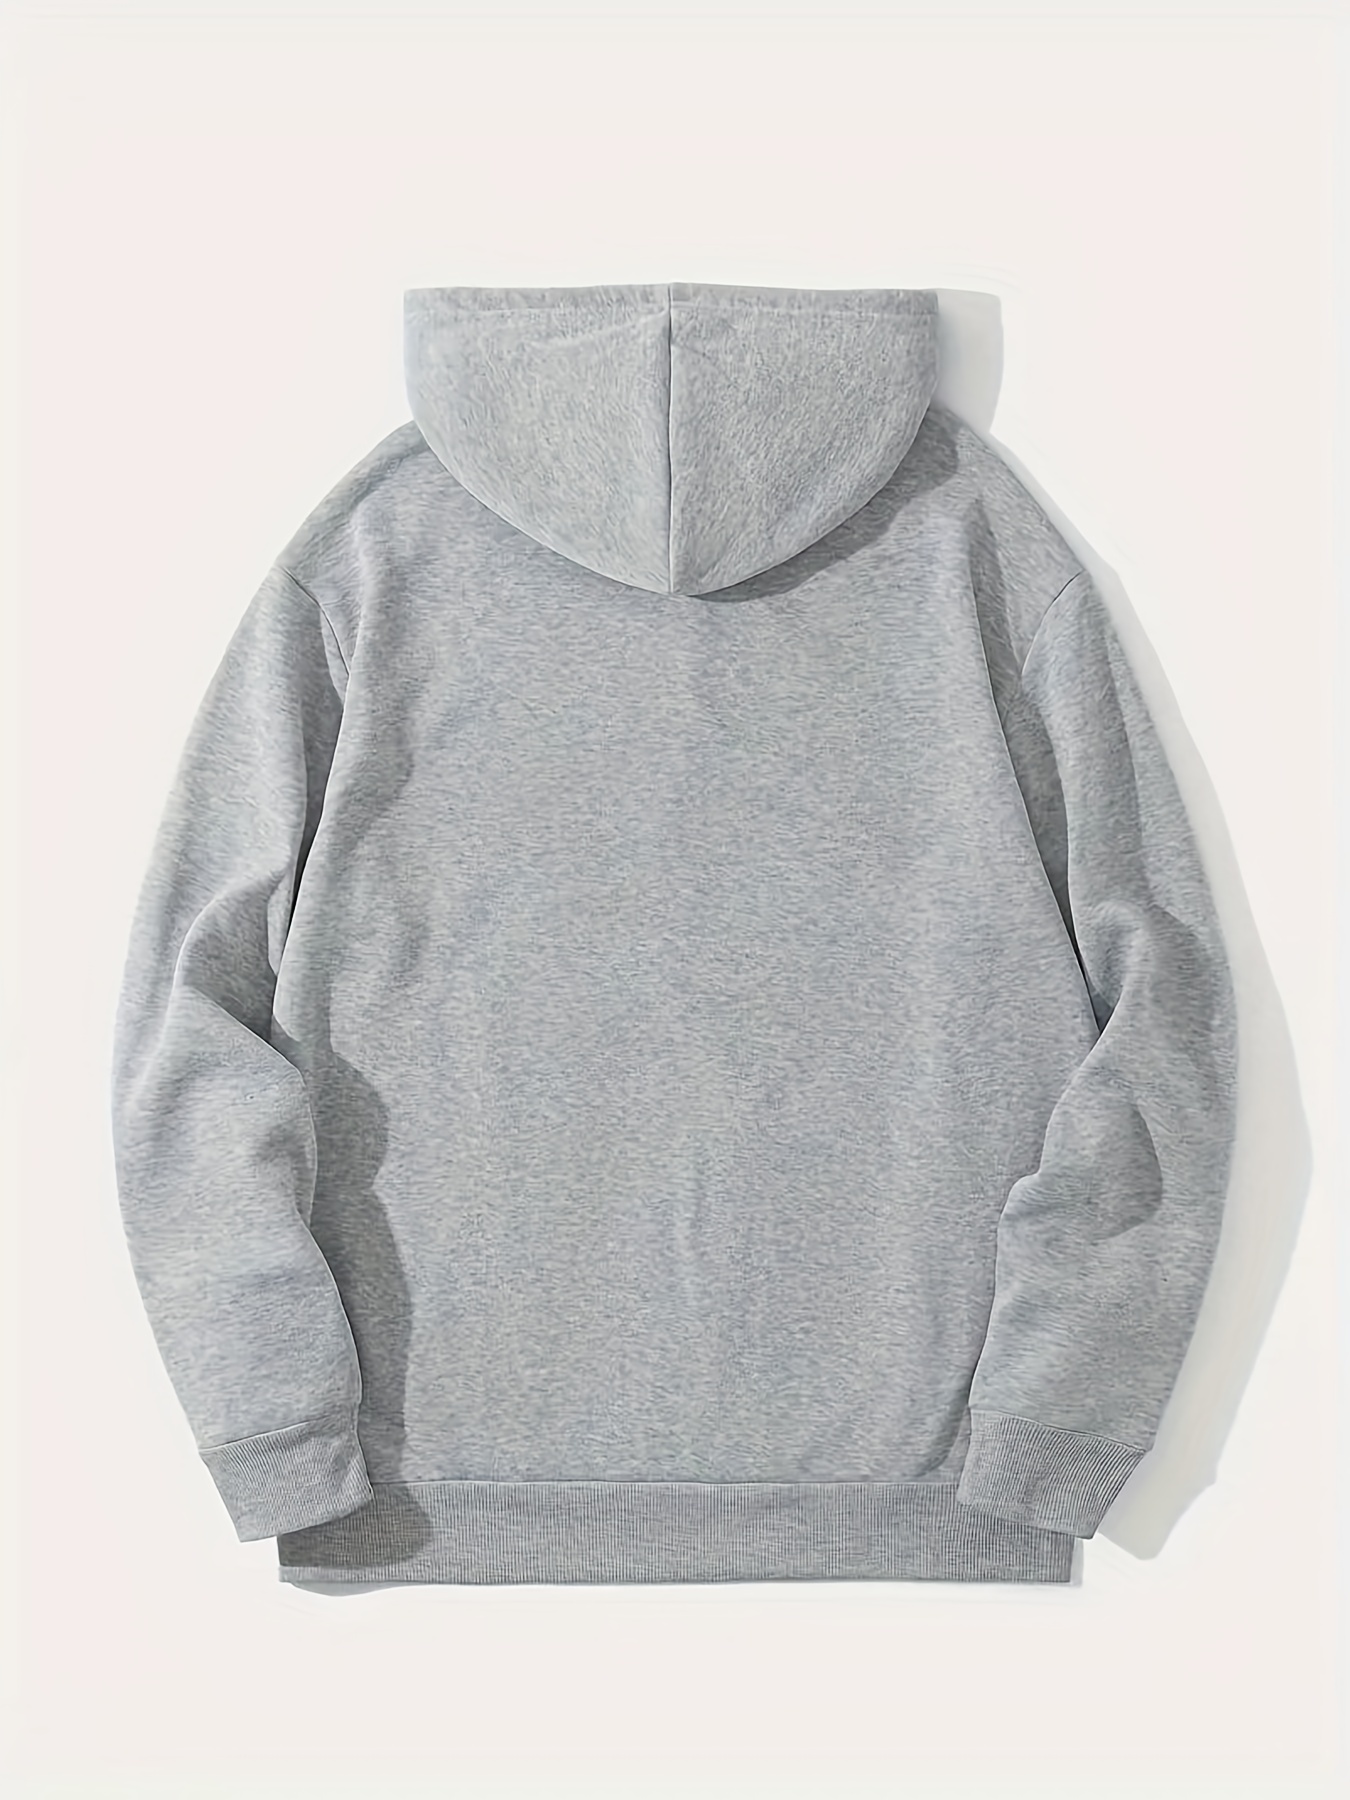 Headphone Smile Print Hoodie, Hoodies For Men, Men’s Casual Graphic Design Pullover Hooded Sweatshirt With Kangaroo Pocket Streetwear For Winter Fall, As Gifts